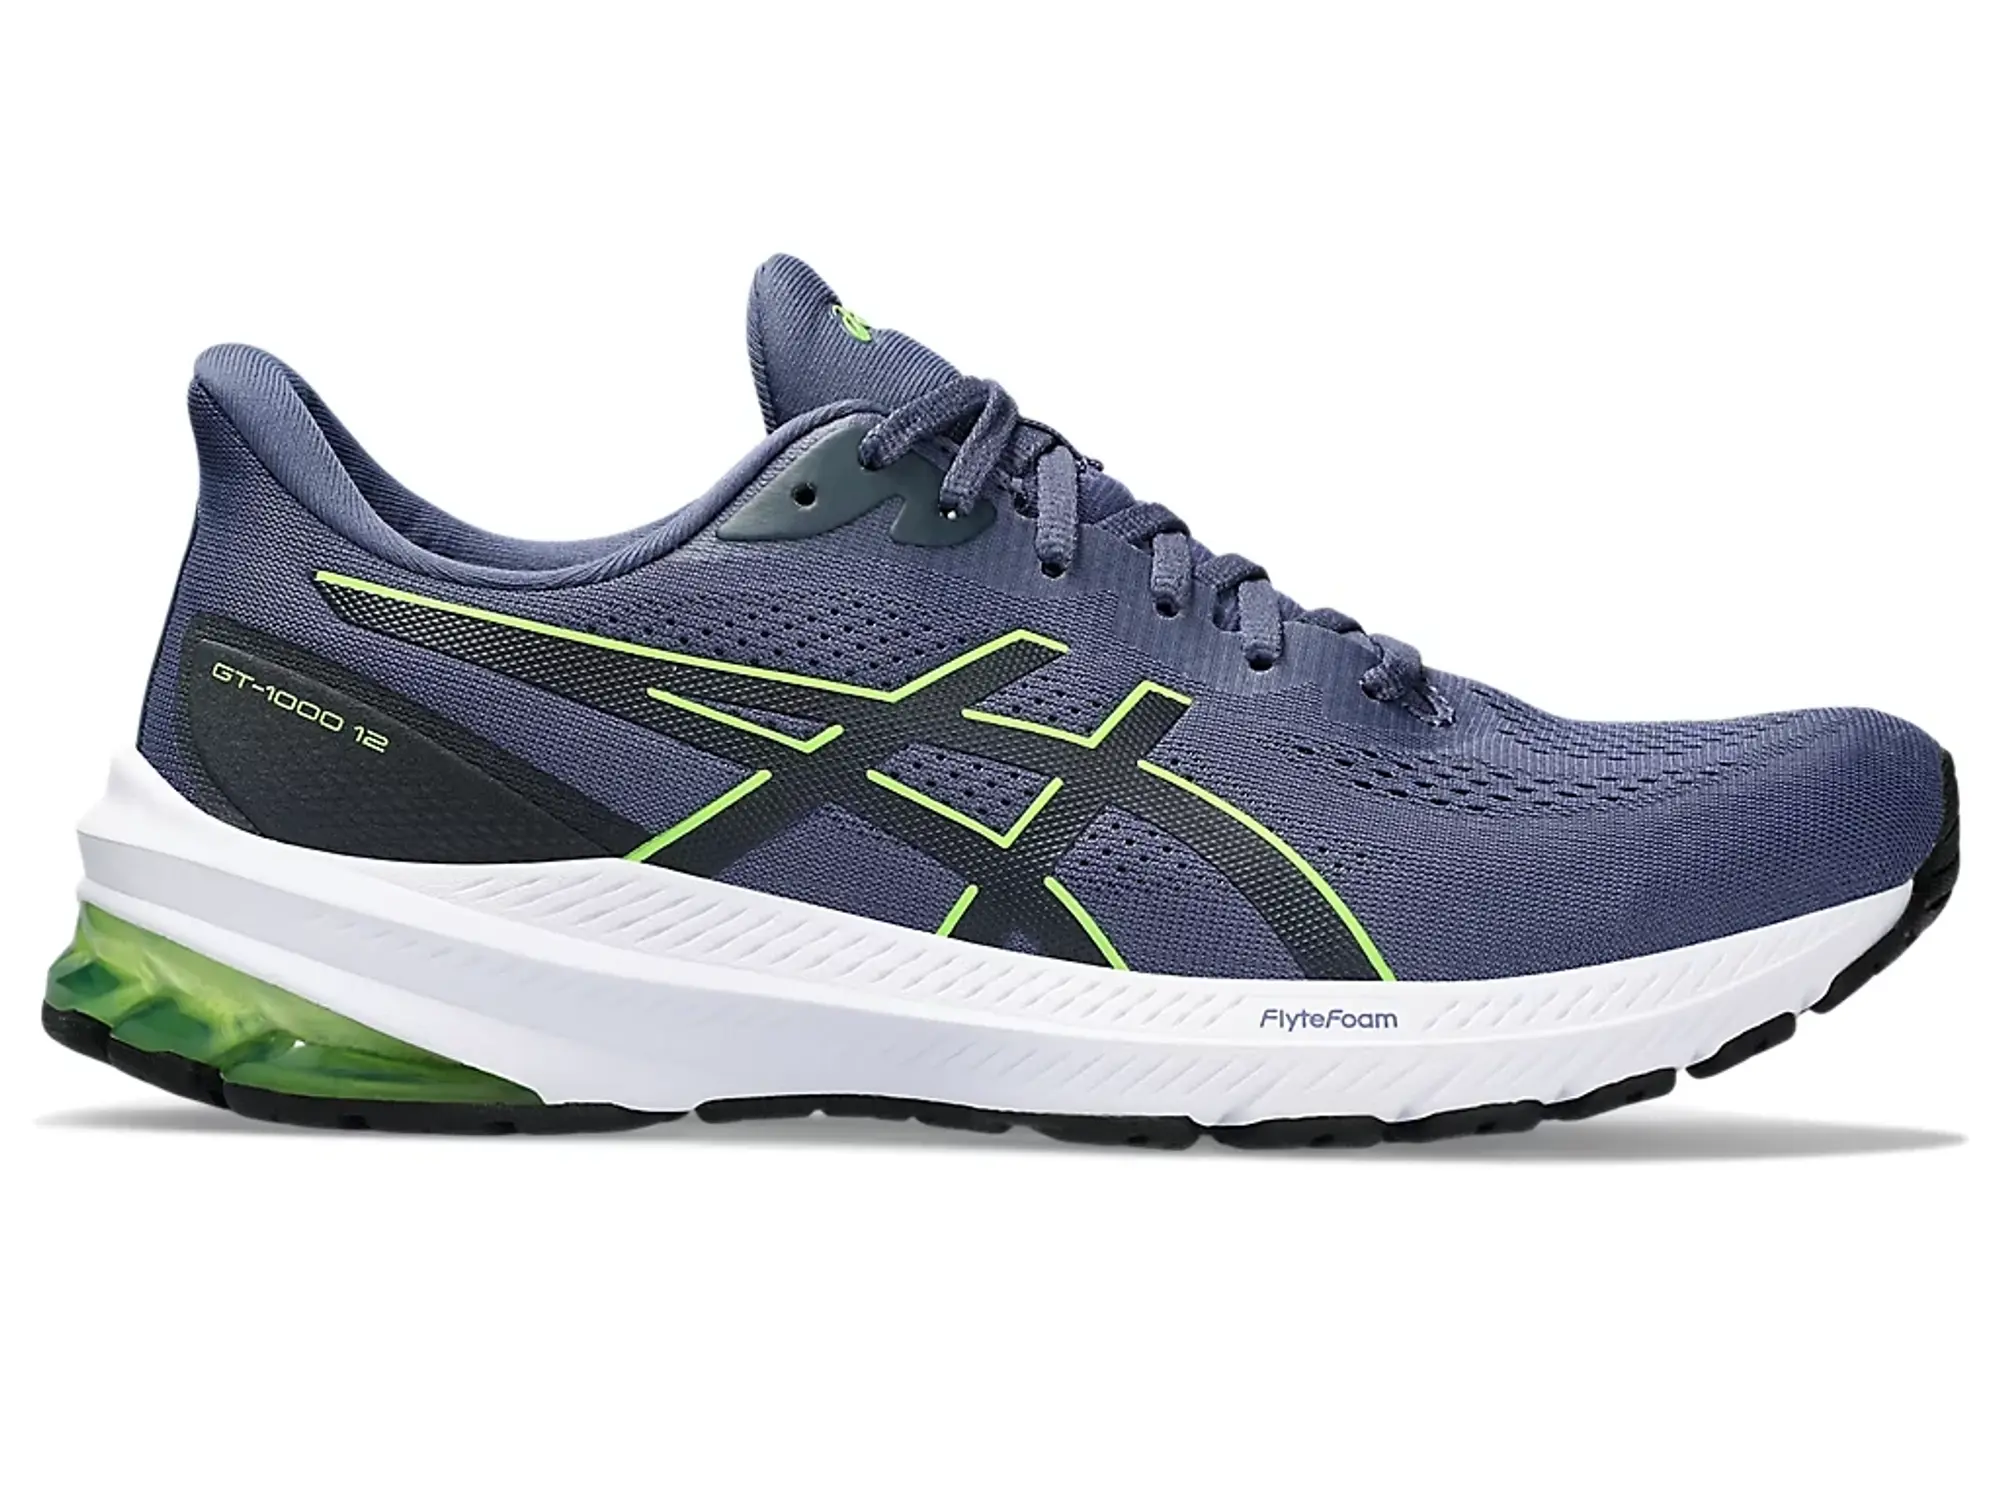 ASICS GT-1000 12 Stability Running Shoe Men - Blue, Neon Green